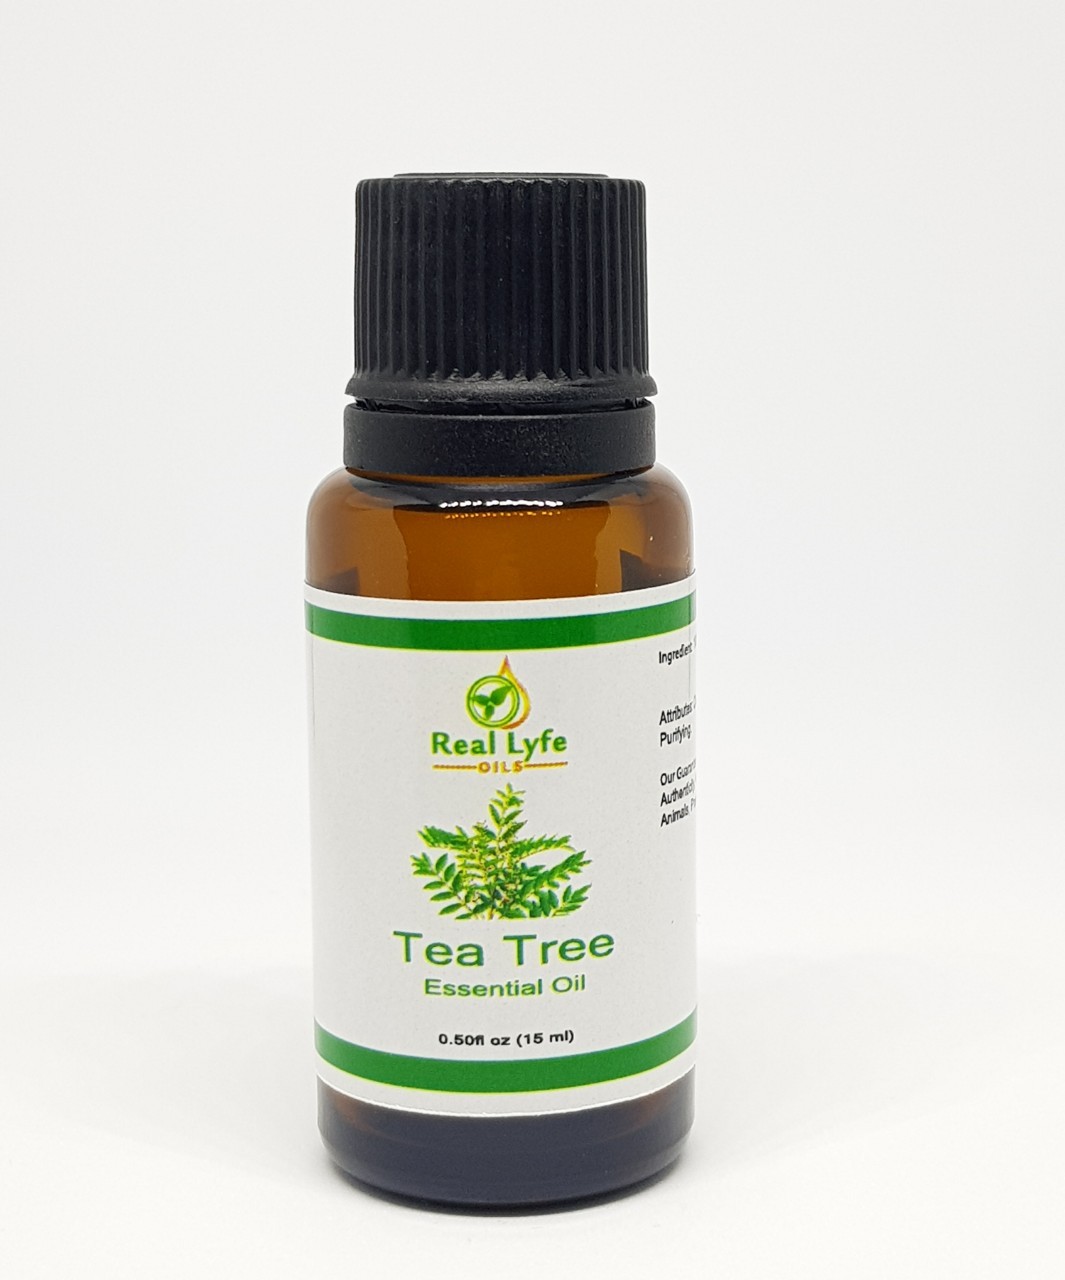 Real Lyfe Oils Tea Tree Essential Oil 15 ml - น้ำมันหอมระเหยทีทรี 15 ml, aromatherapy oil, diffuser, humidifier, massage oil.